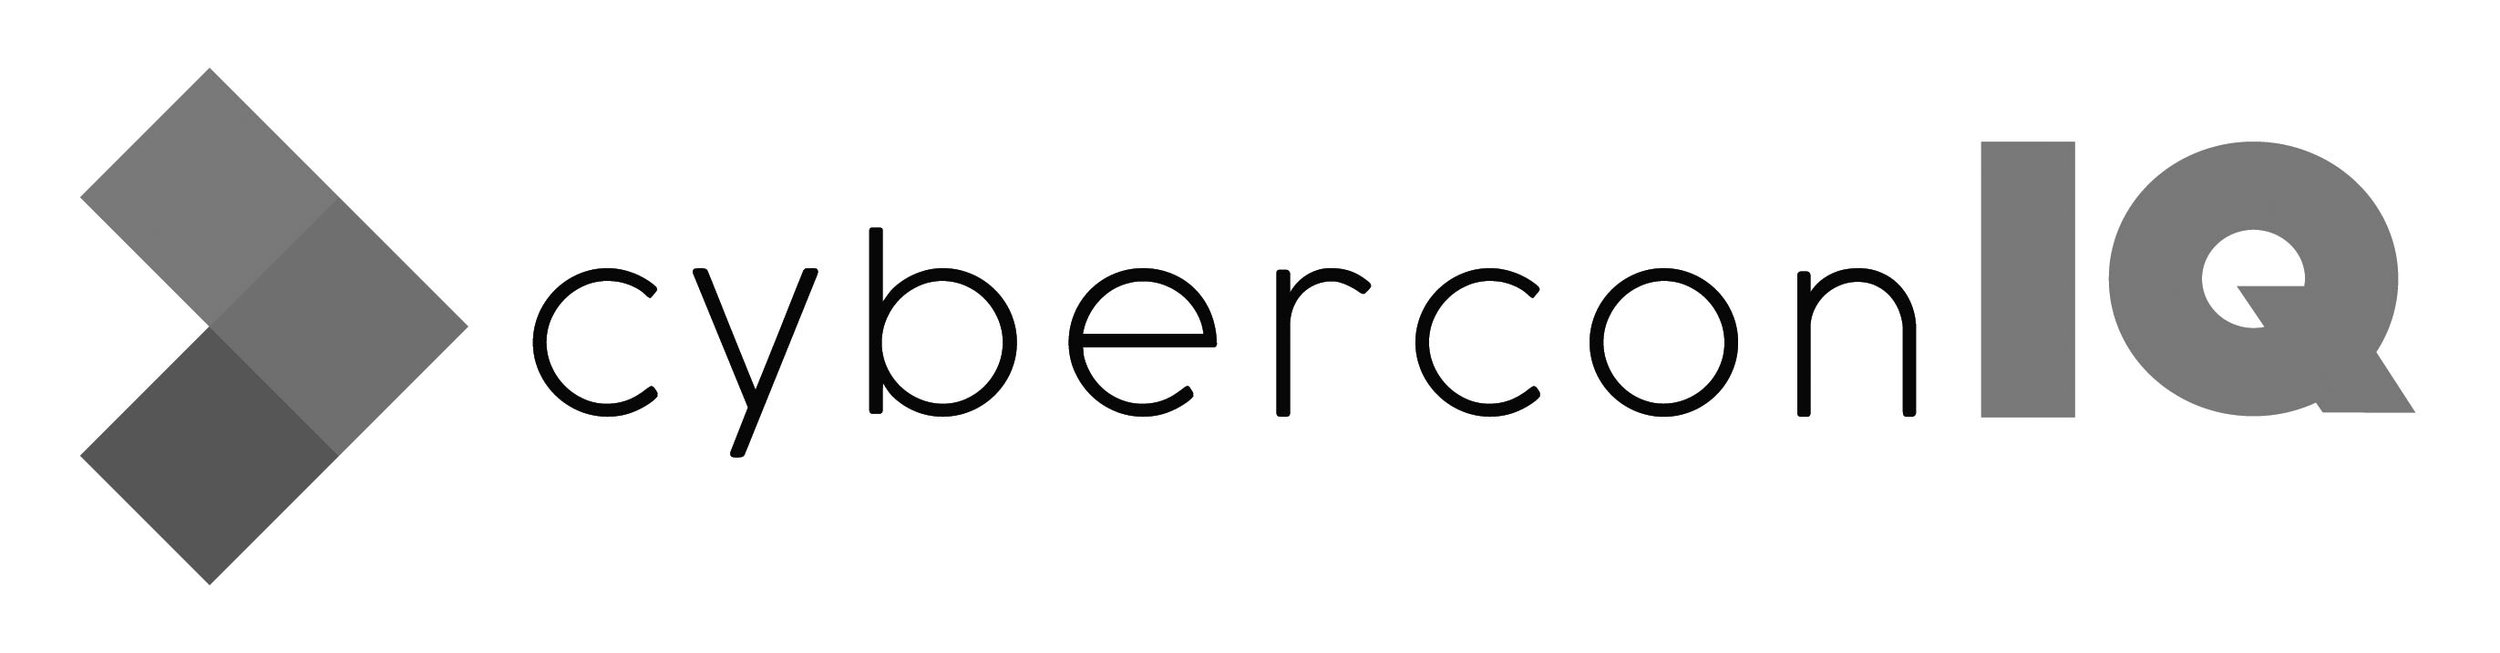 cyberconIQ Logo OL - BW.jpg